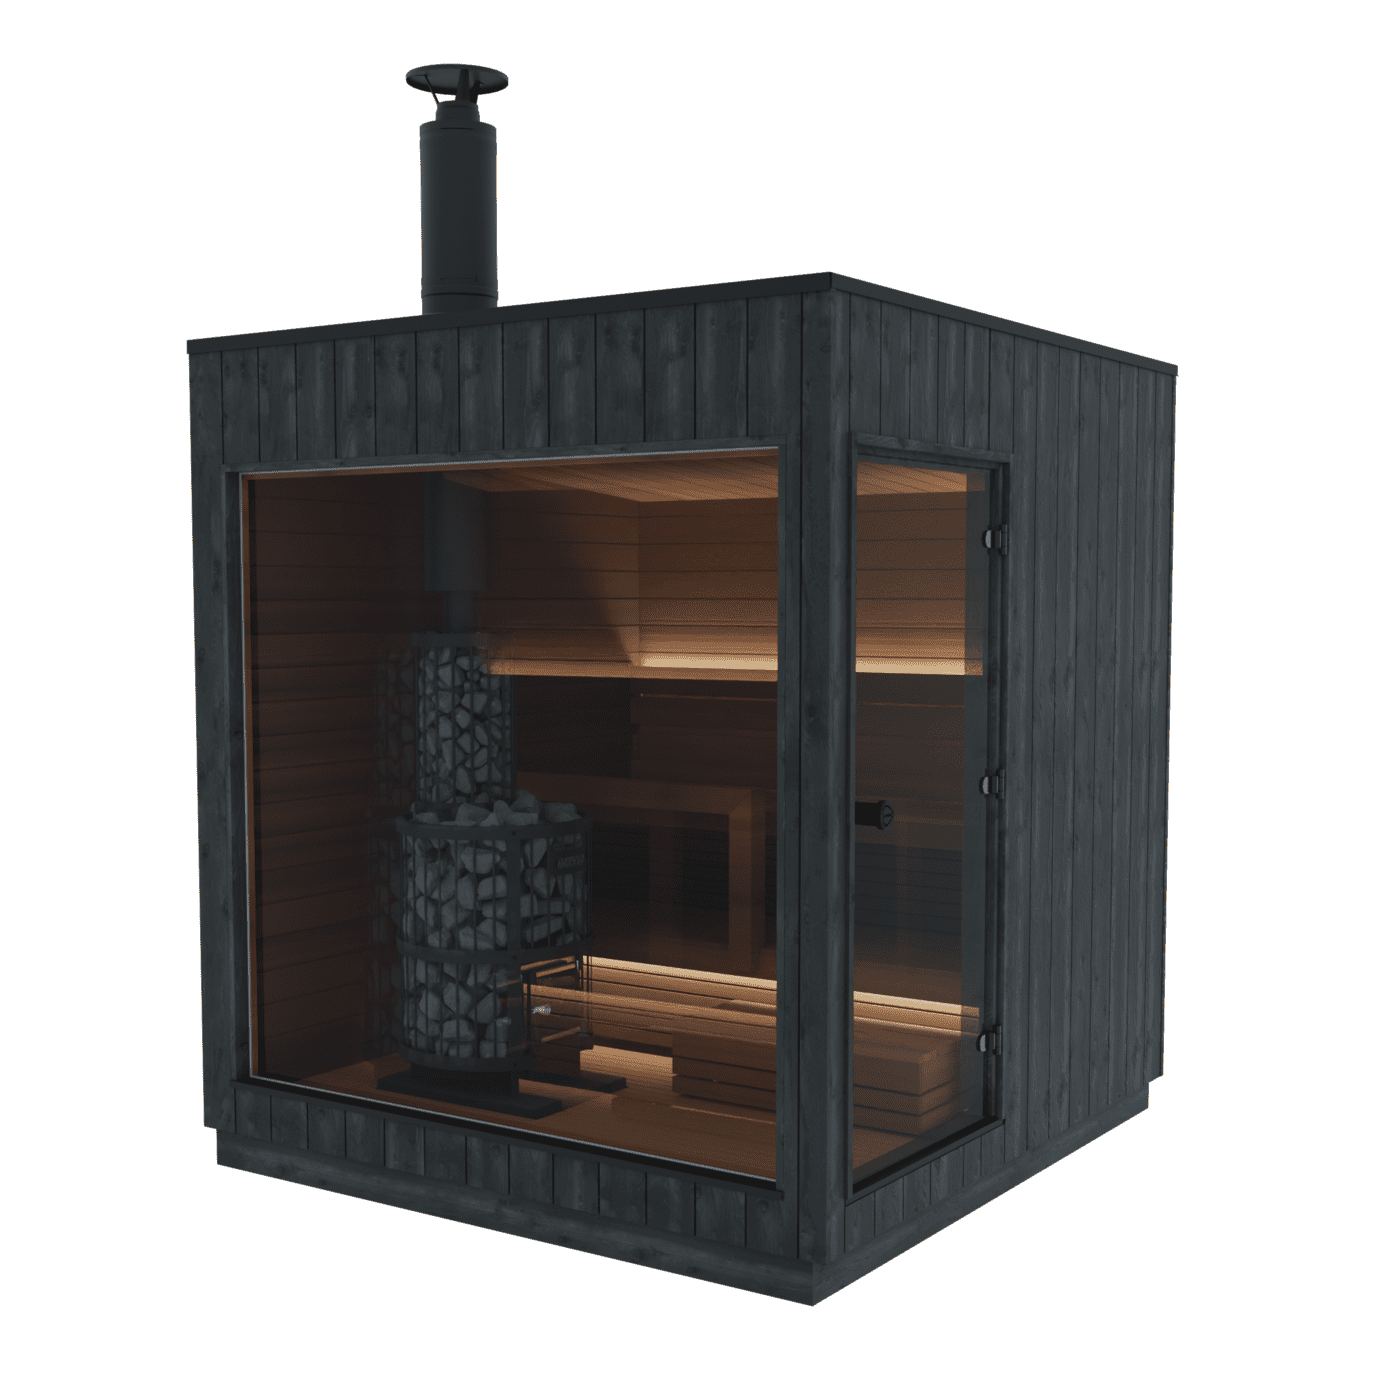 Produktbild: KIRAMI FINVISION SAUNA NORDIC MISTY - Tür rechts, Saunaofen Harvia Legend 240 Holz